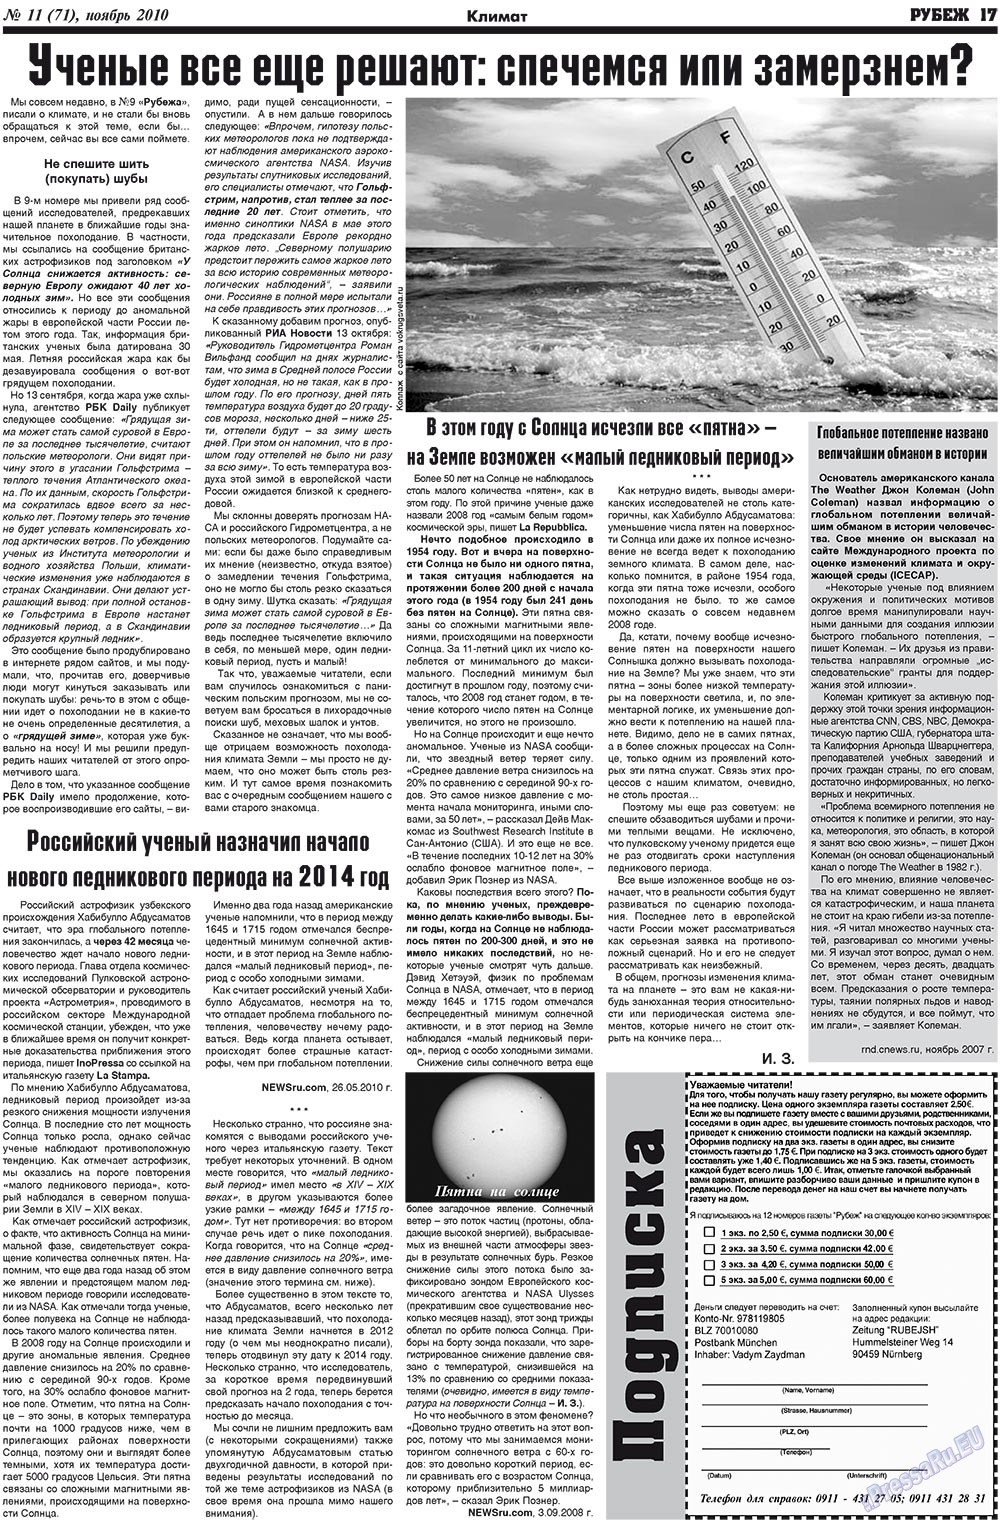 Рубеж, газета. 2010 №11 стр.17